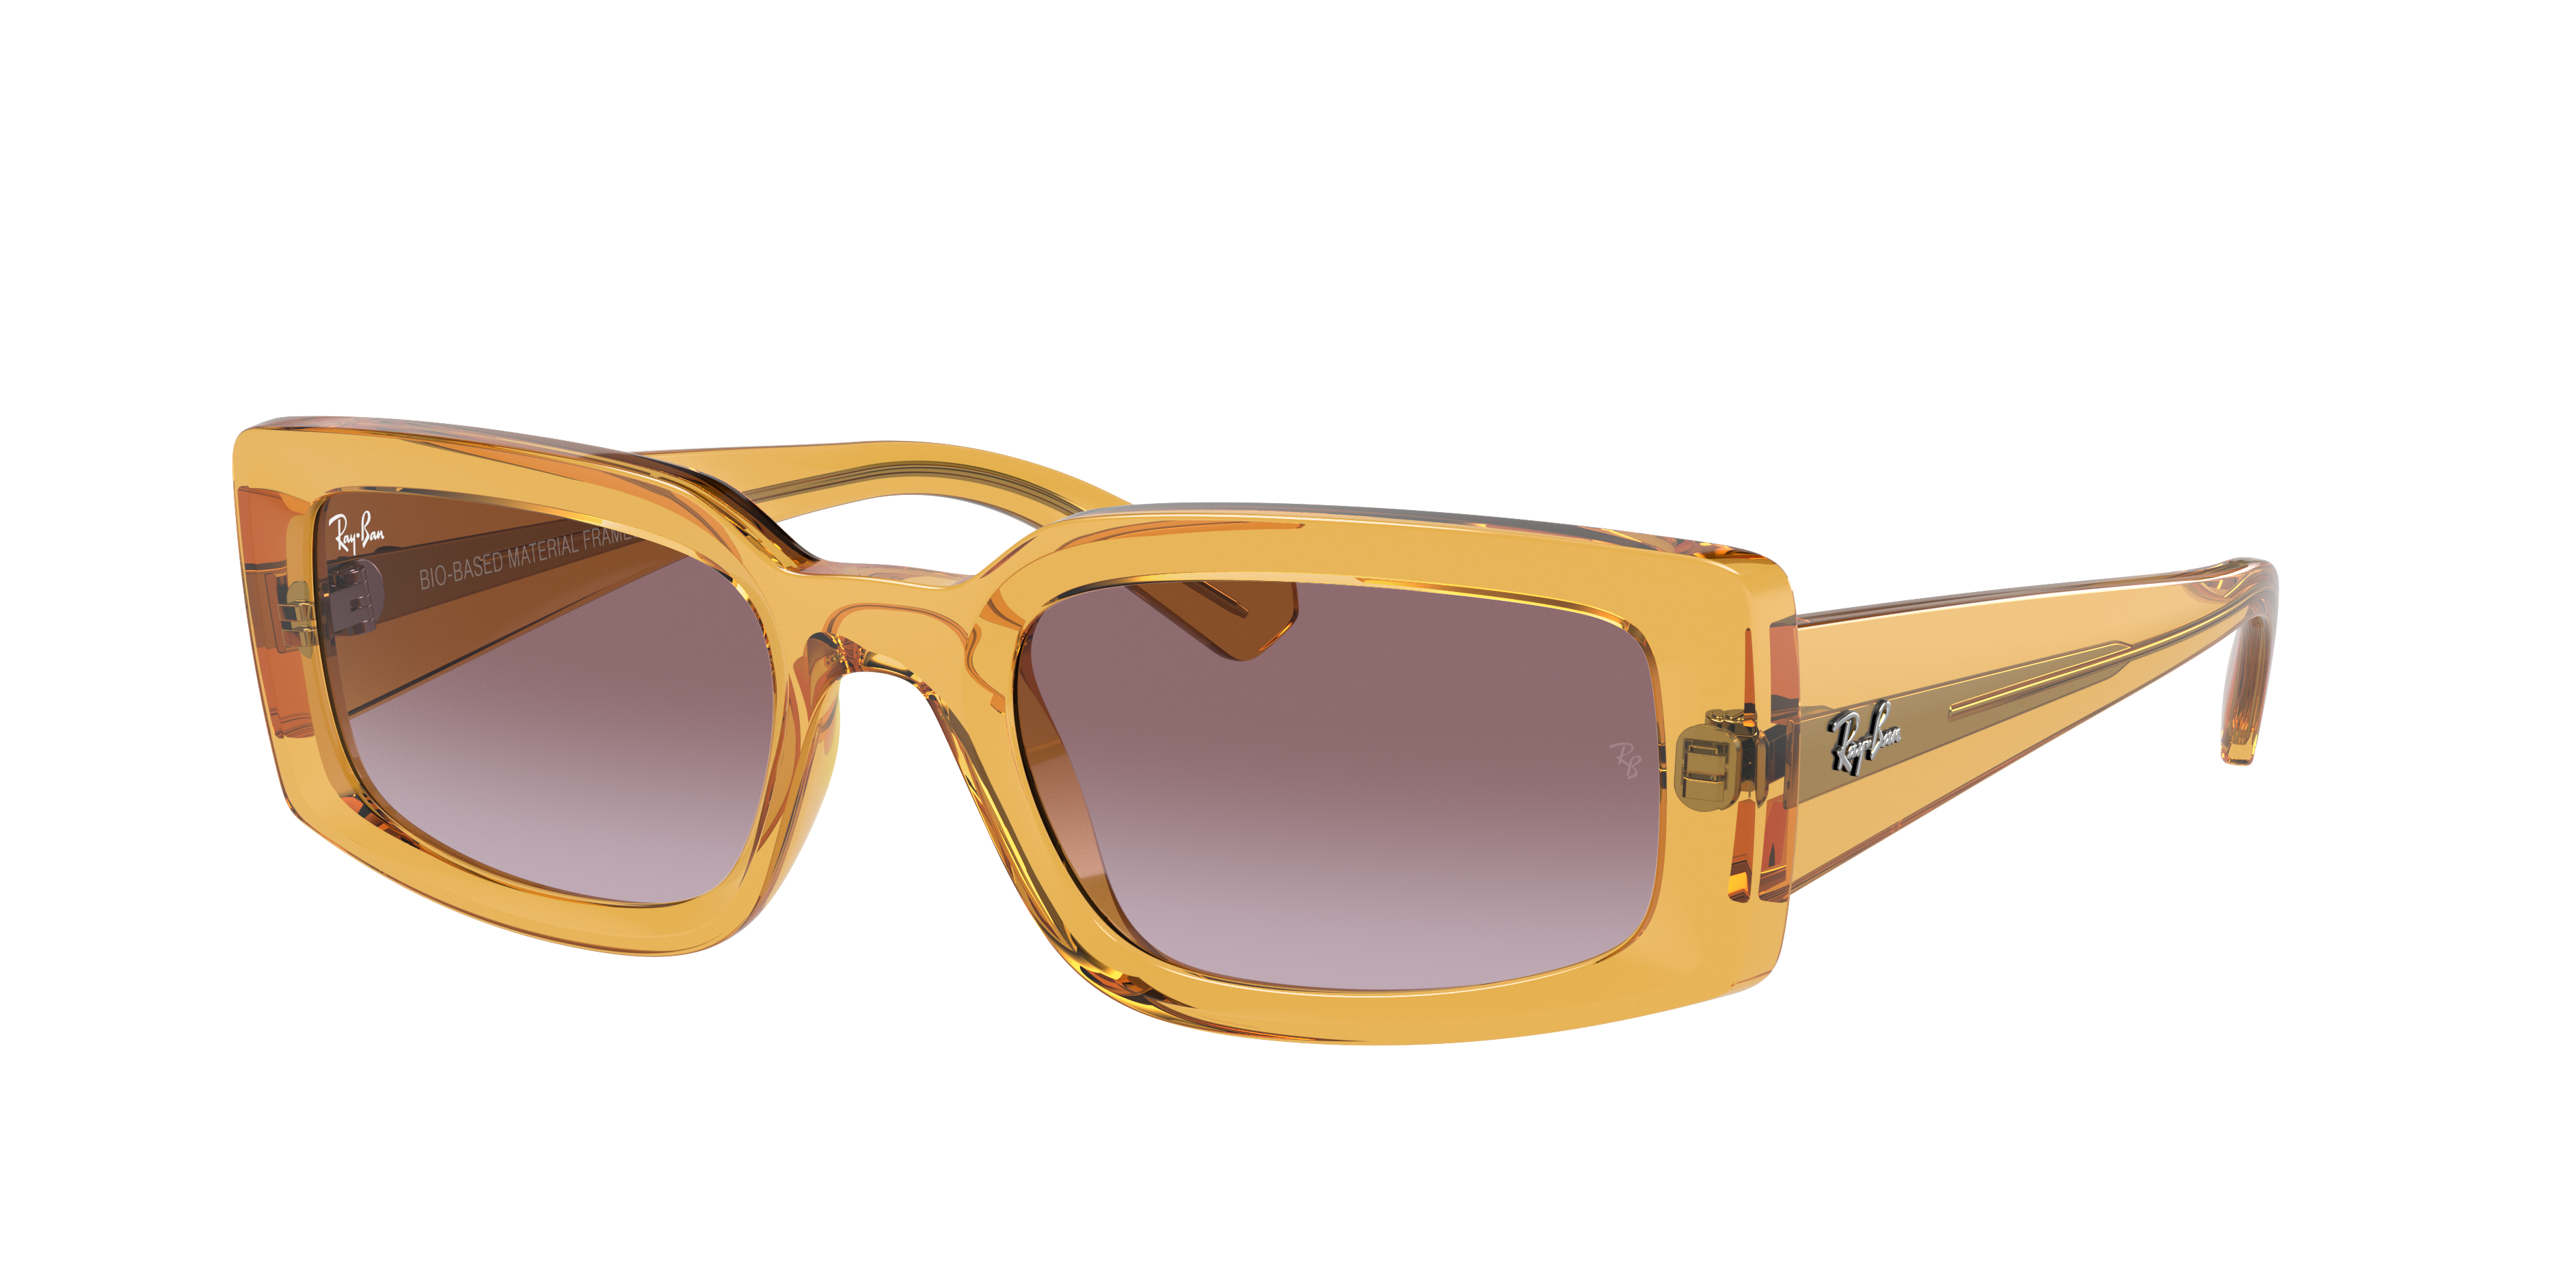 Kiliane Bio-based Sunglasses in Transparent Yellow and Dark Violet | Ray-Ban ®